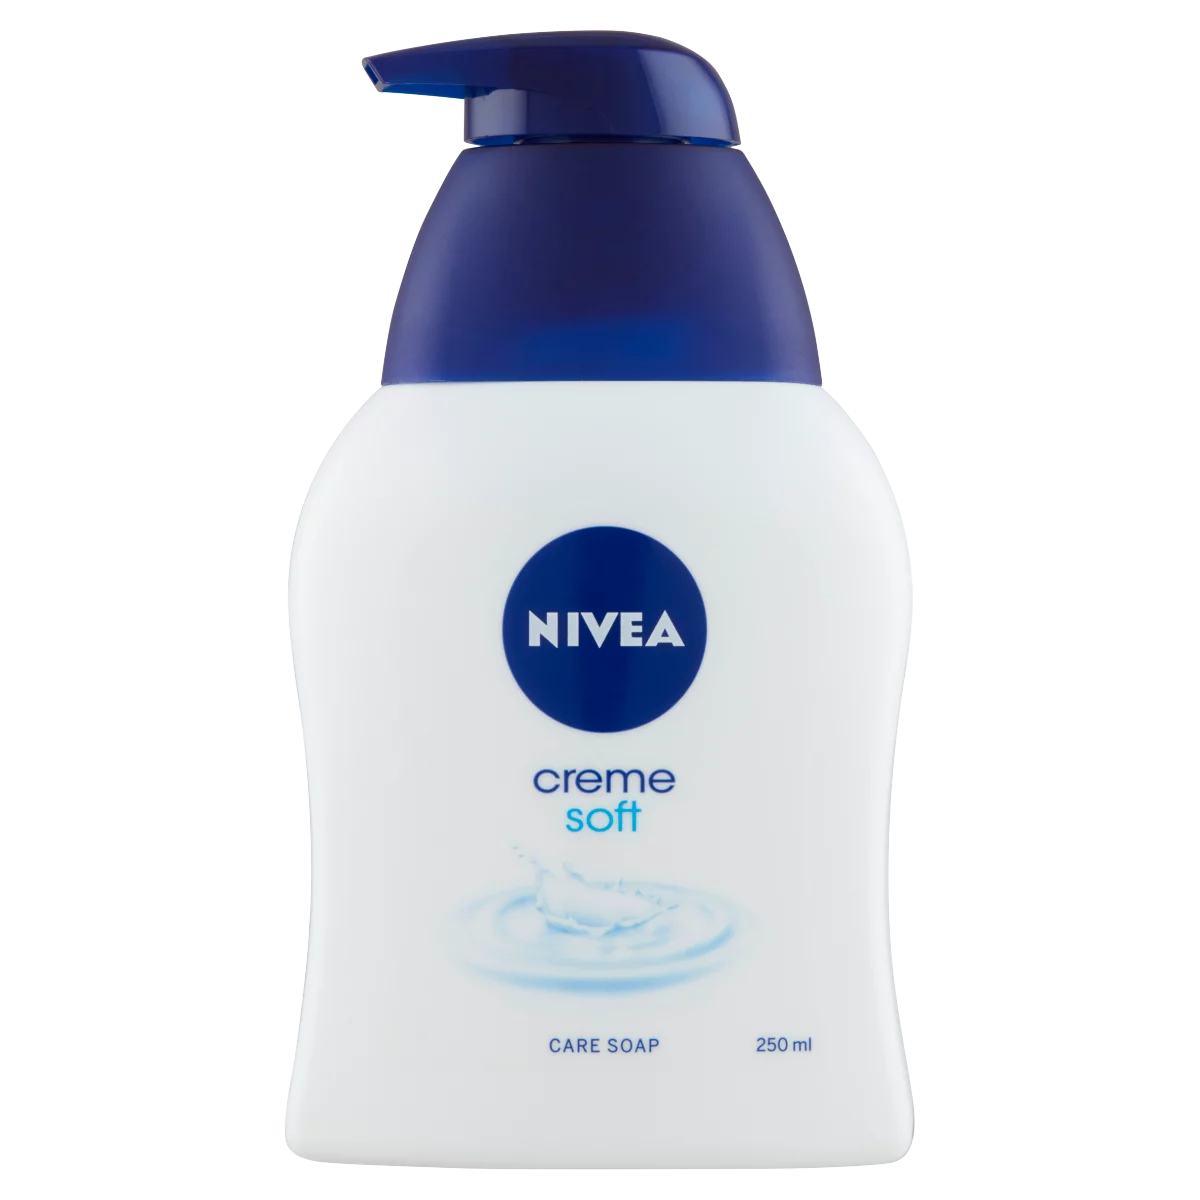 NIVEA Creme Soft folyékony krémszappan 250 ml